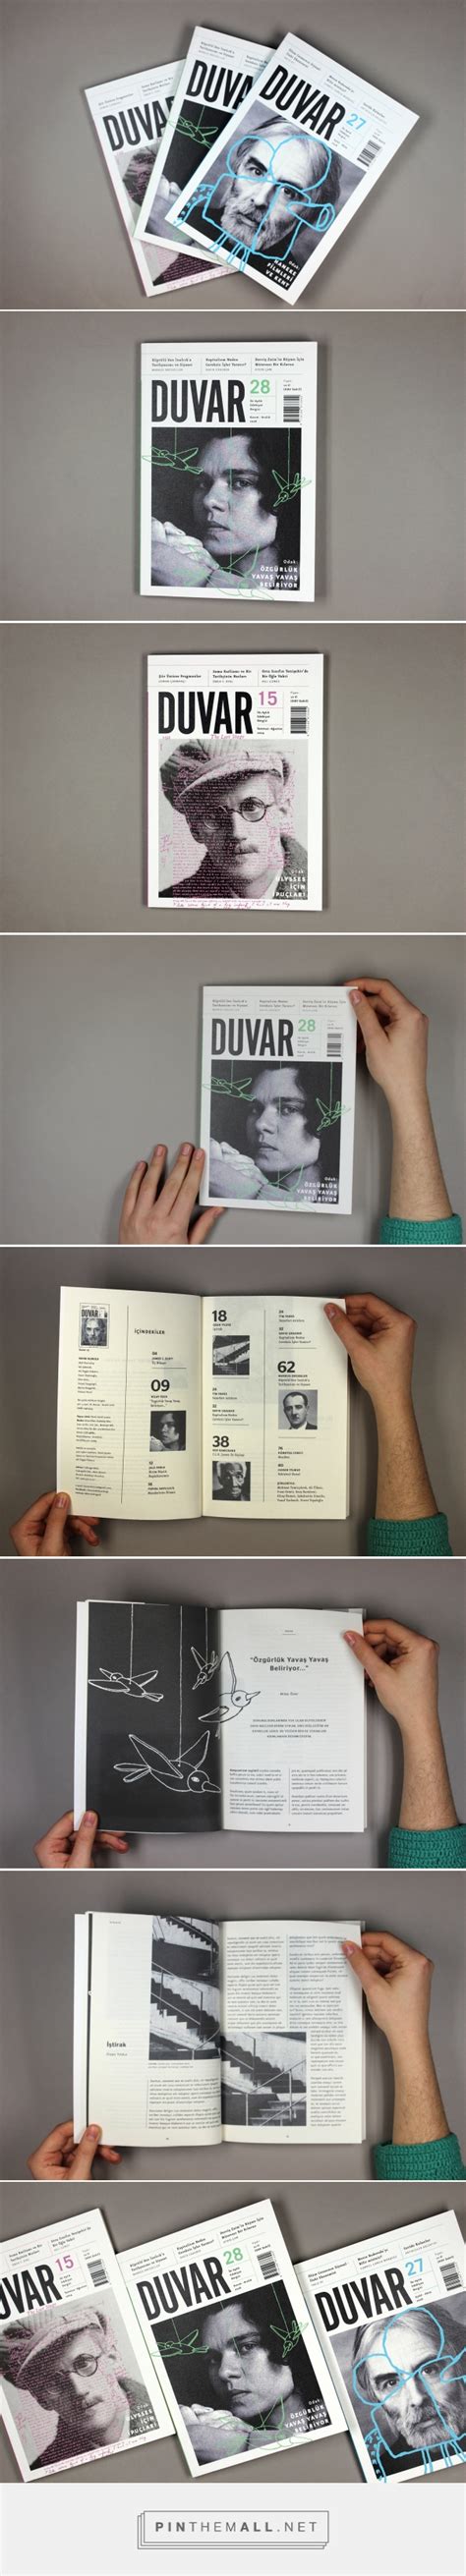 Duvar Edebiyat Dergisi On Behance A Grouped Images Picture Pin